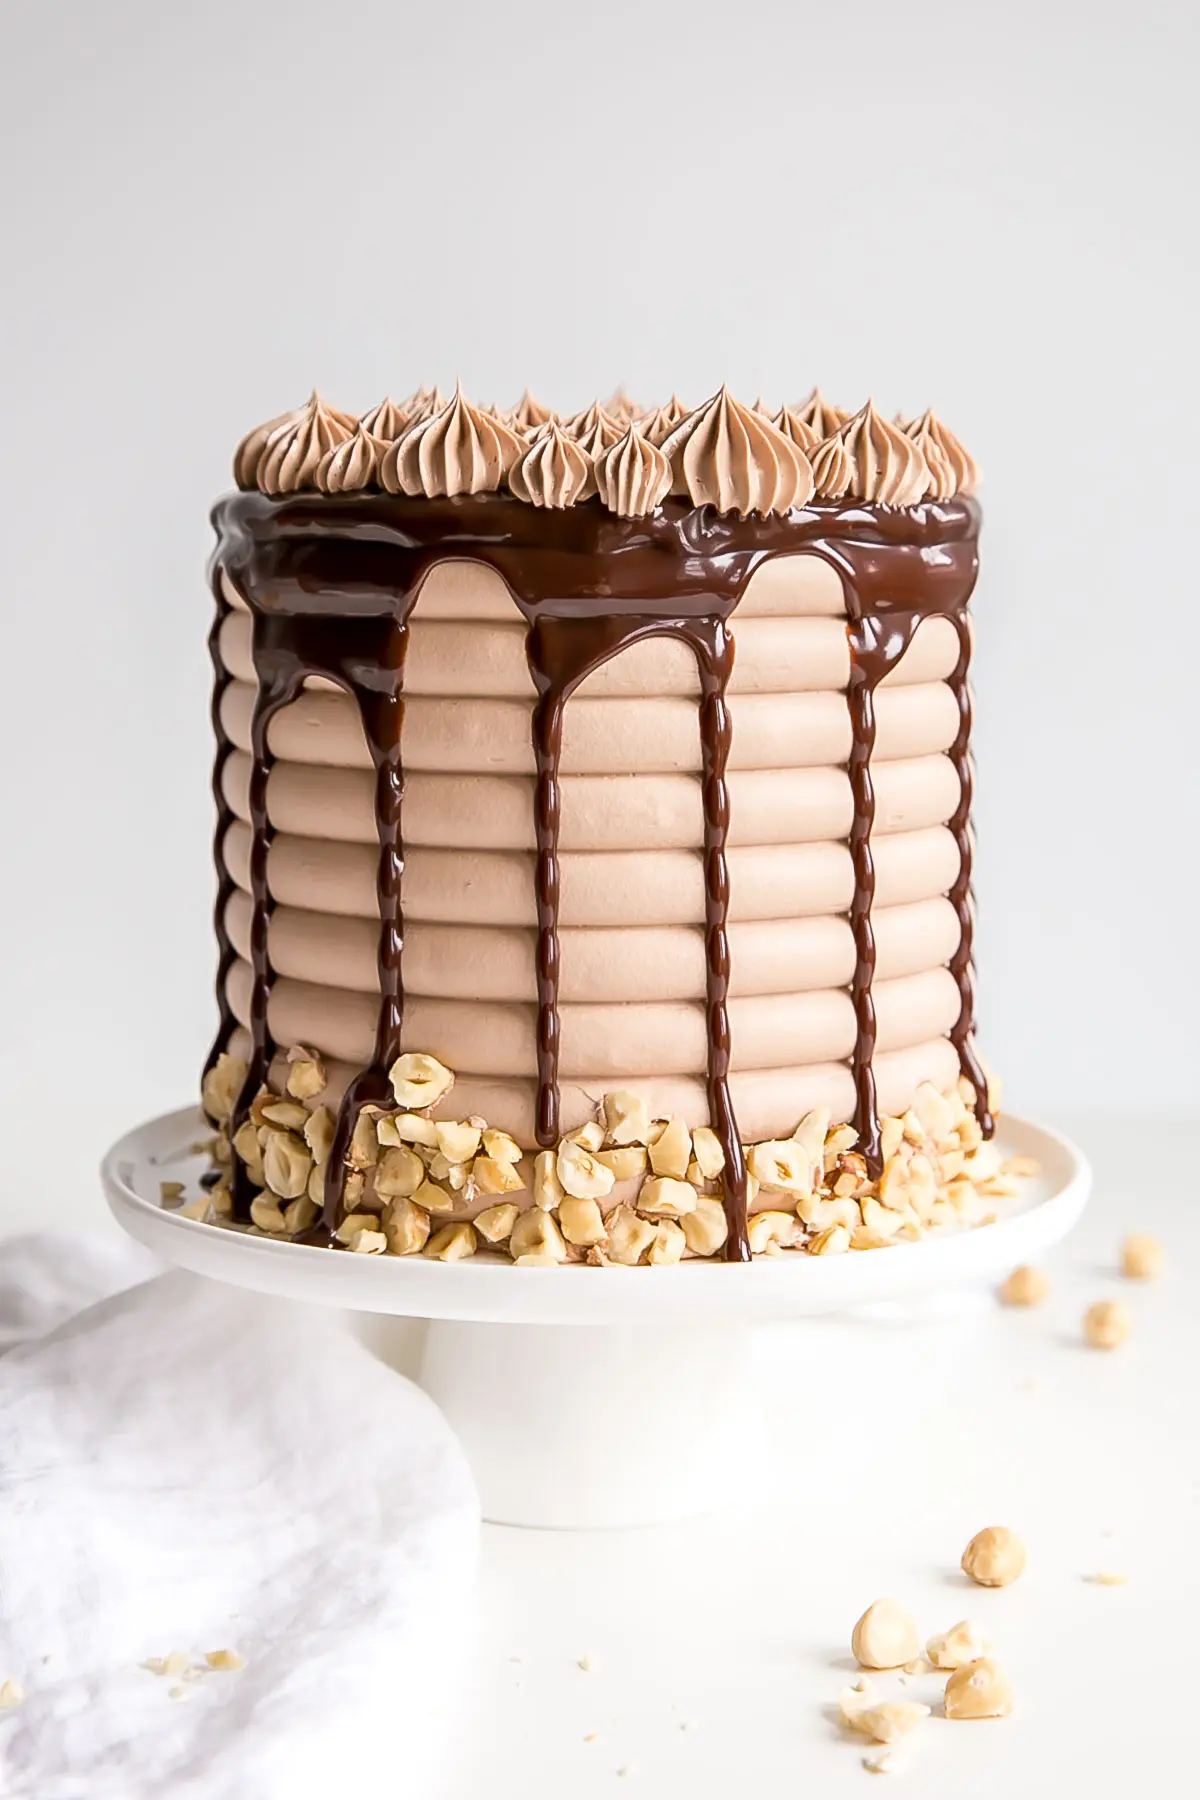 Nutella Cake - Six layers of chocolate cake, Nutella Swiss meringue buttercream, and Nutella ganache.